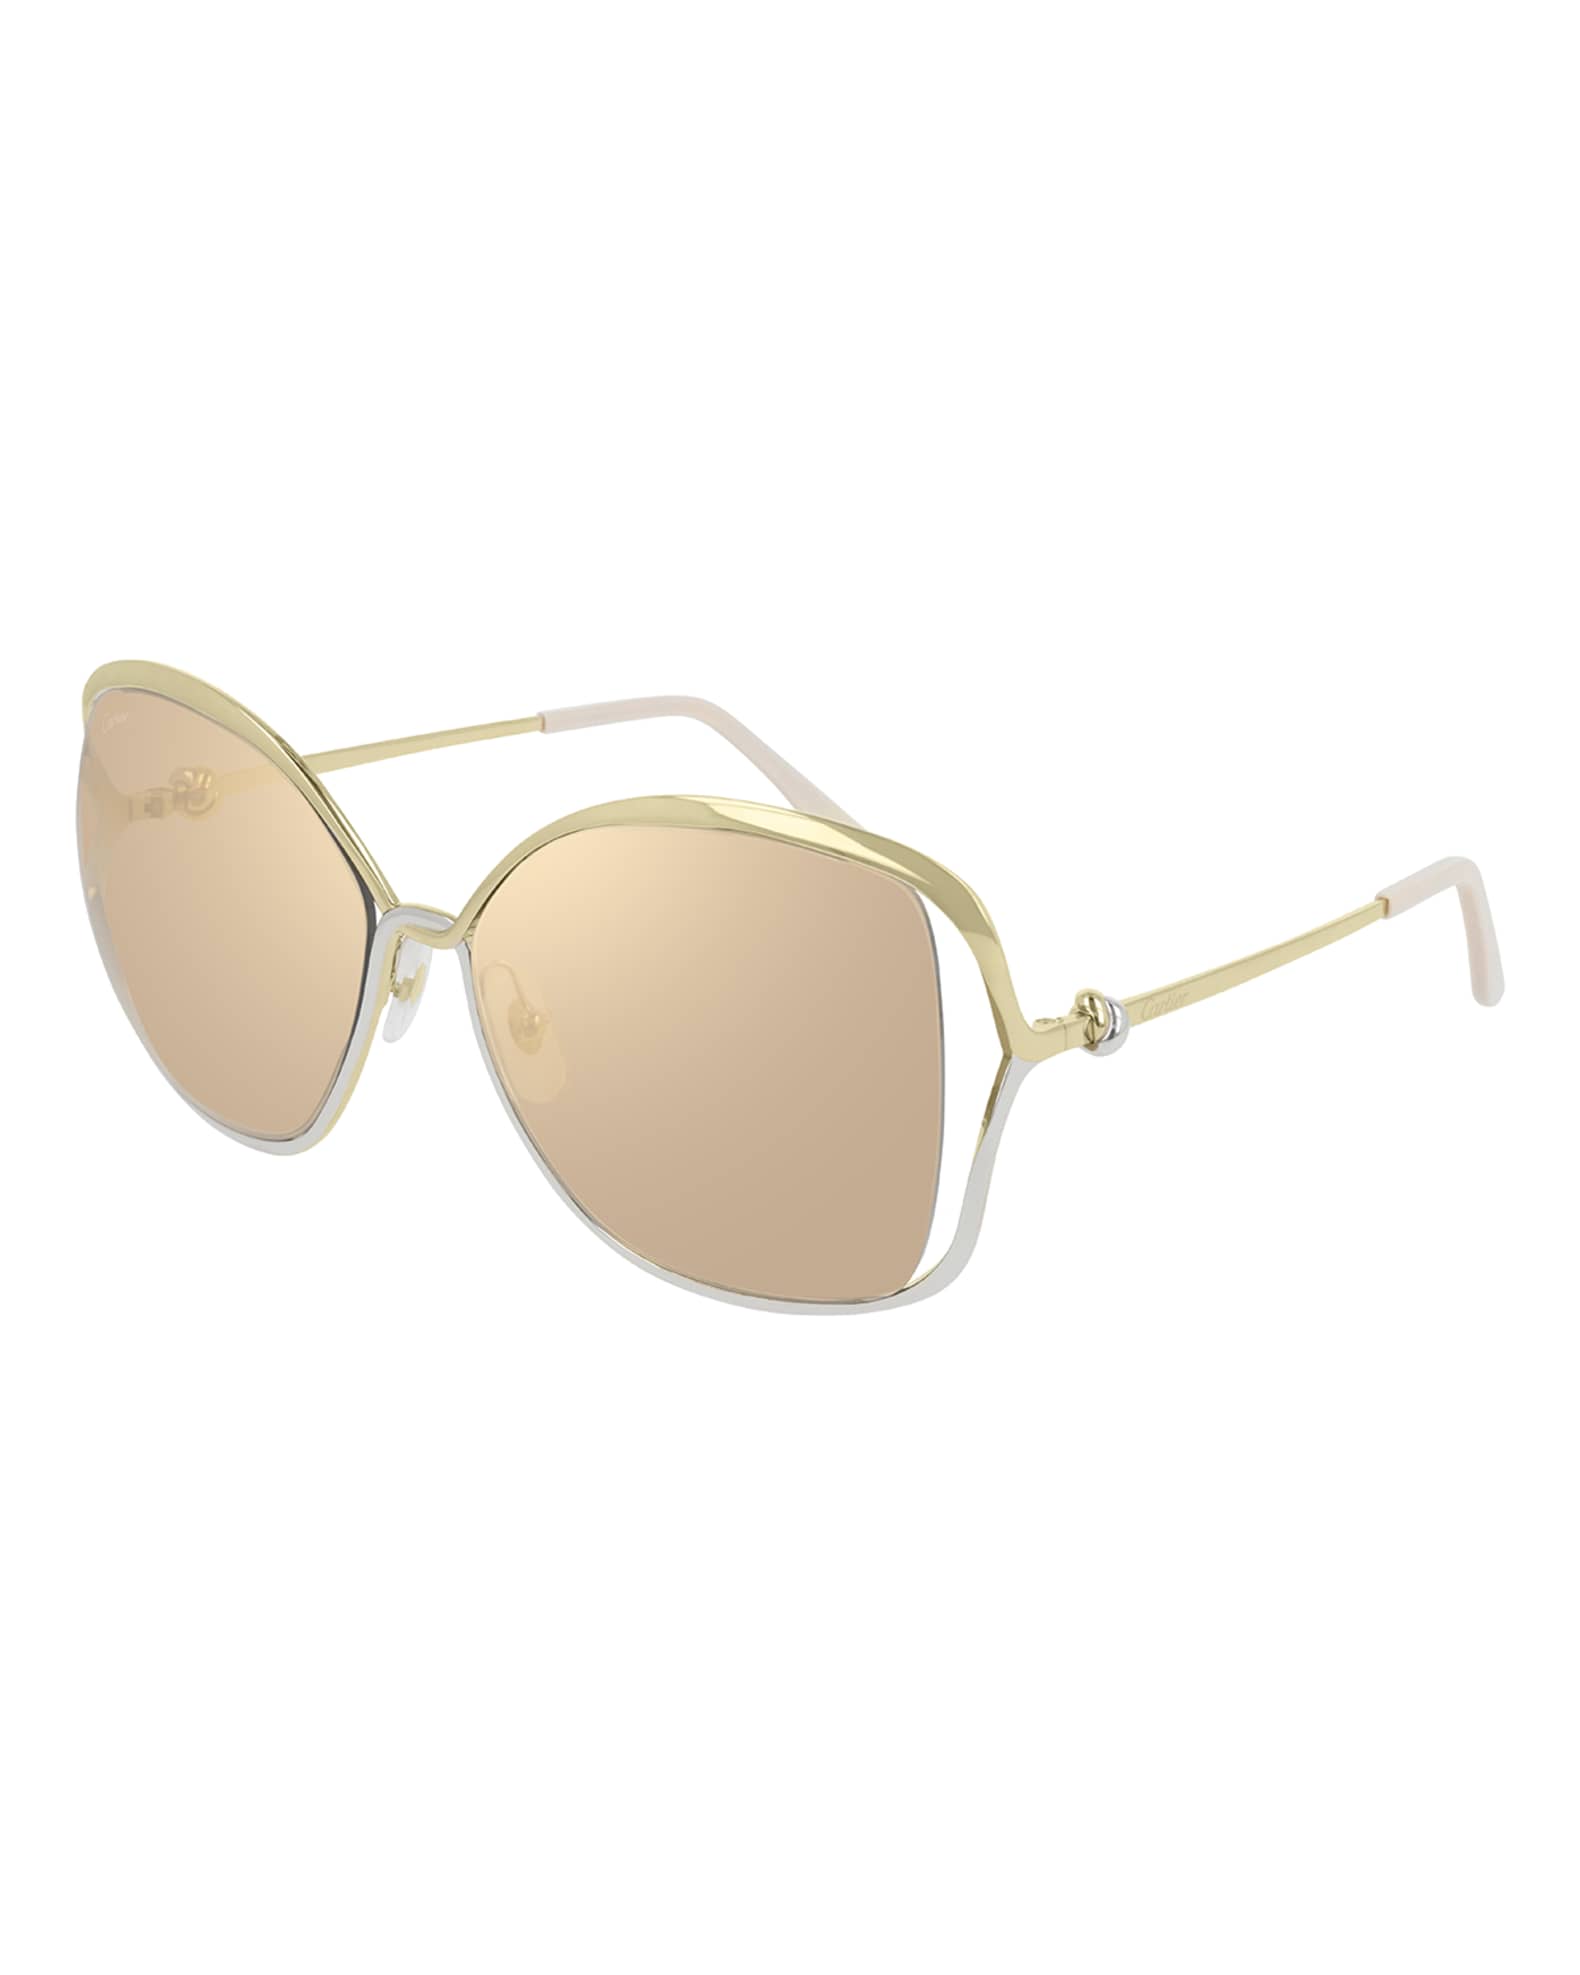 GG square-frame gold-tone sunglasses